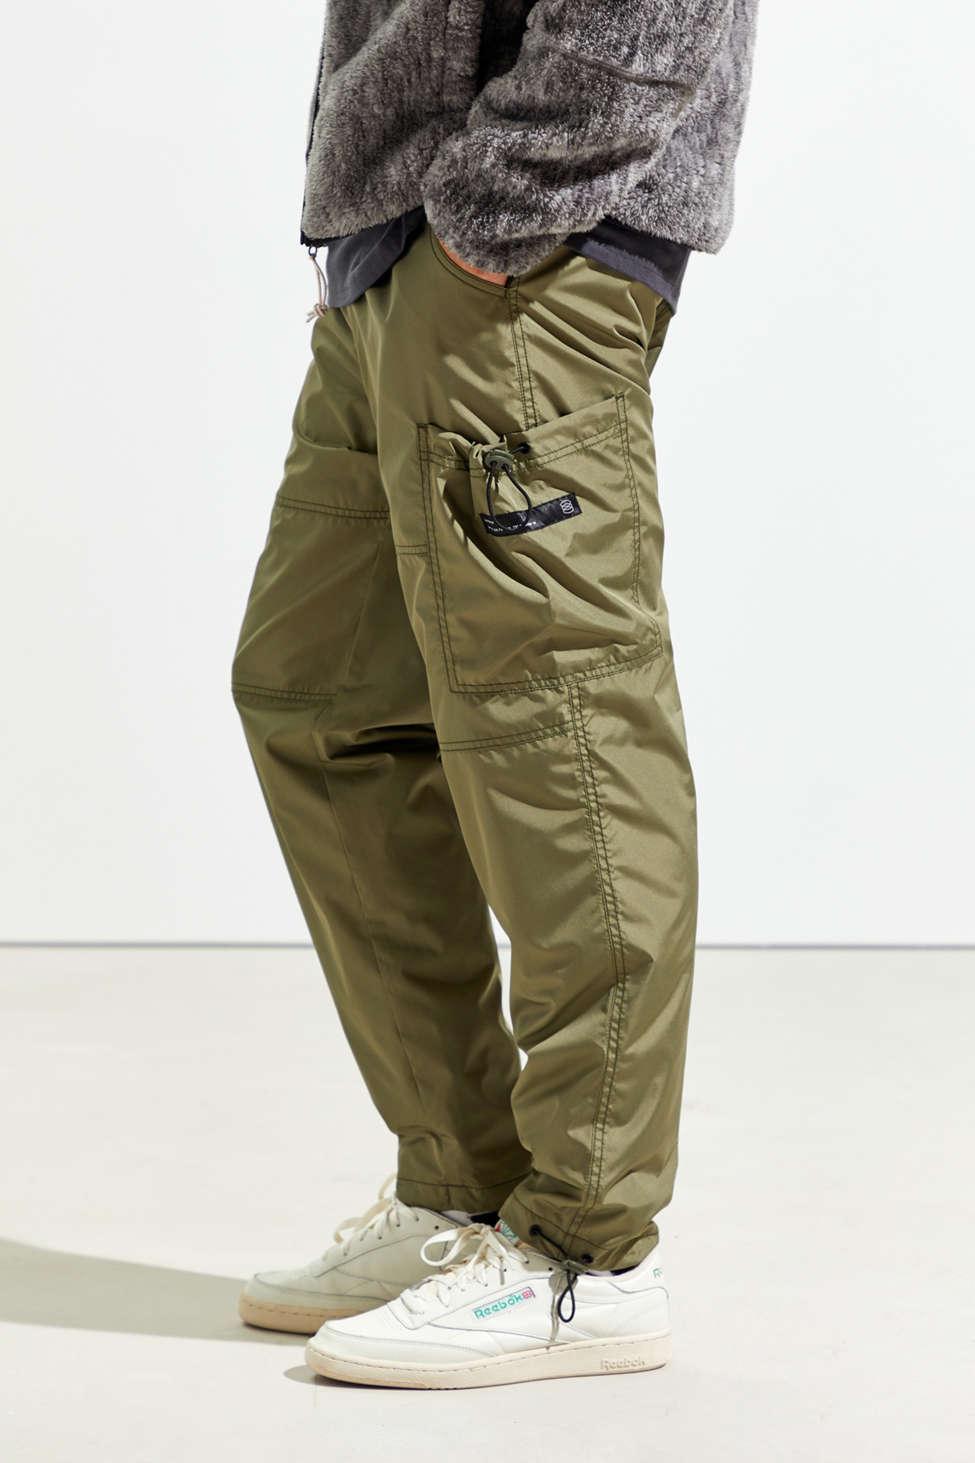 Summer thin functional wind pants men's loose hip-hop big pocket overalls